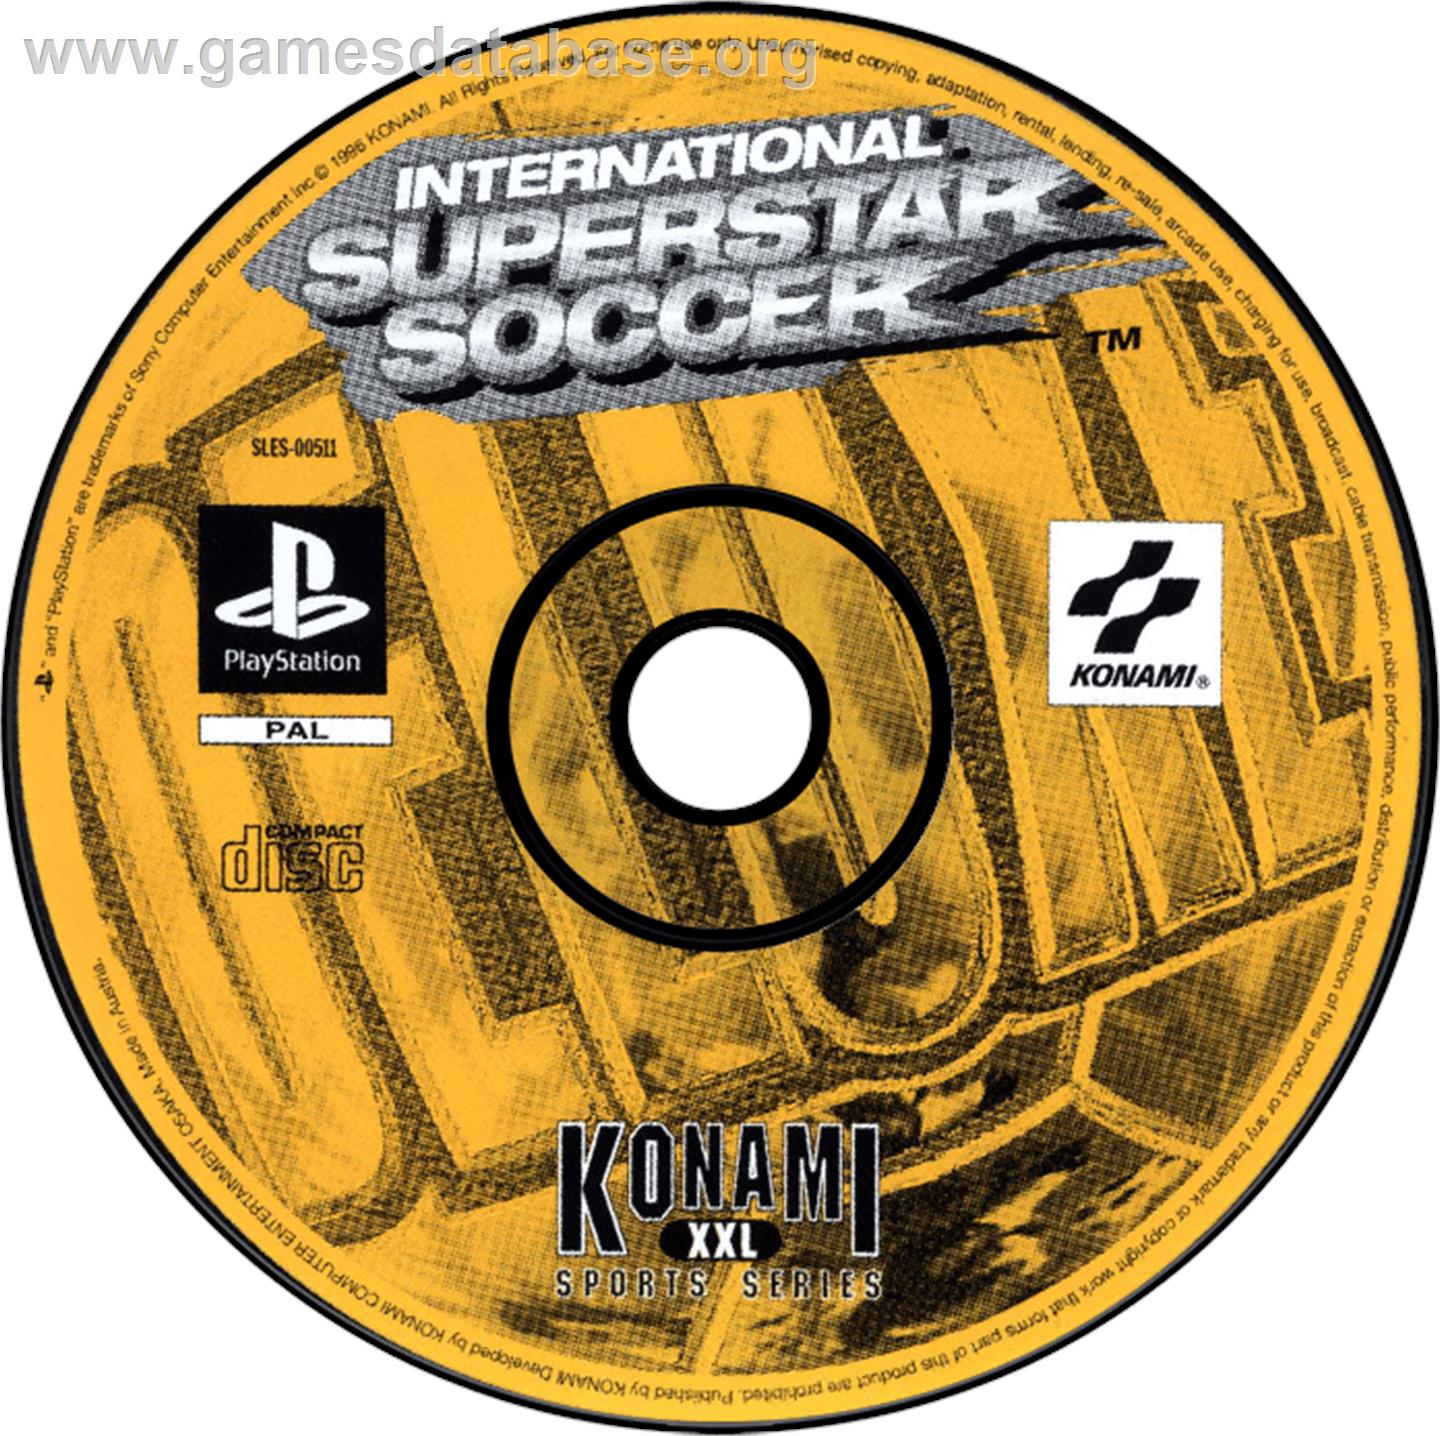 International Superstar Soccer Deluxe - Sony Playstation - Artwork - Disc